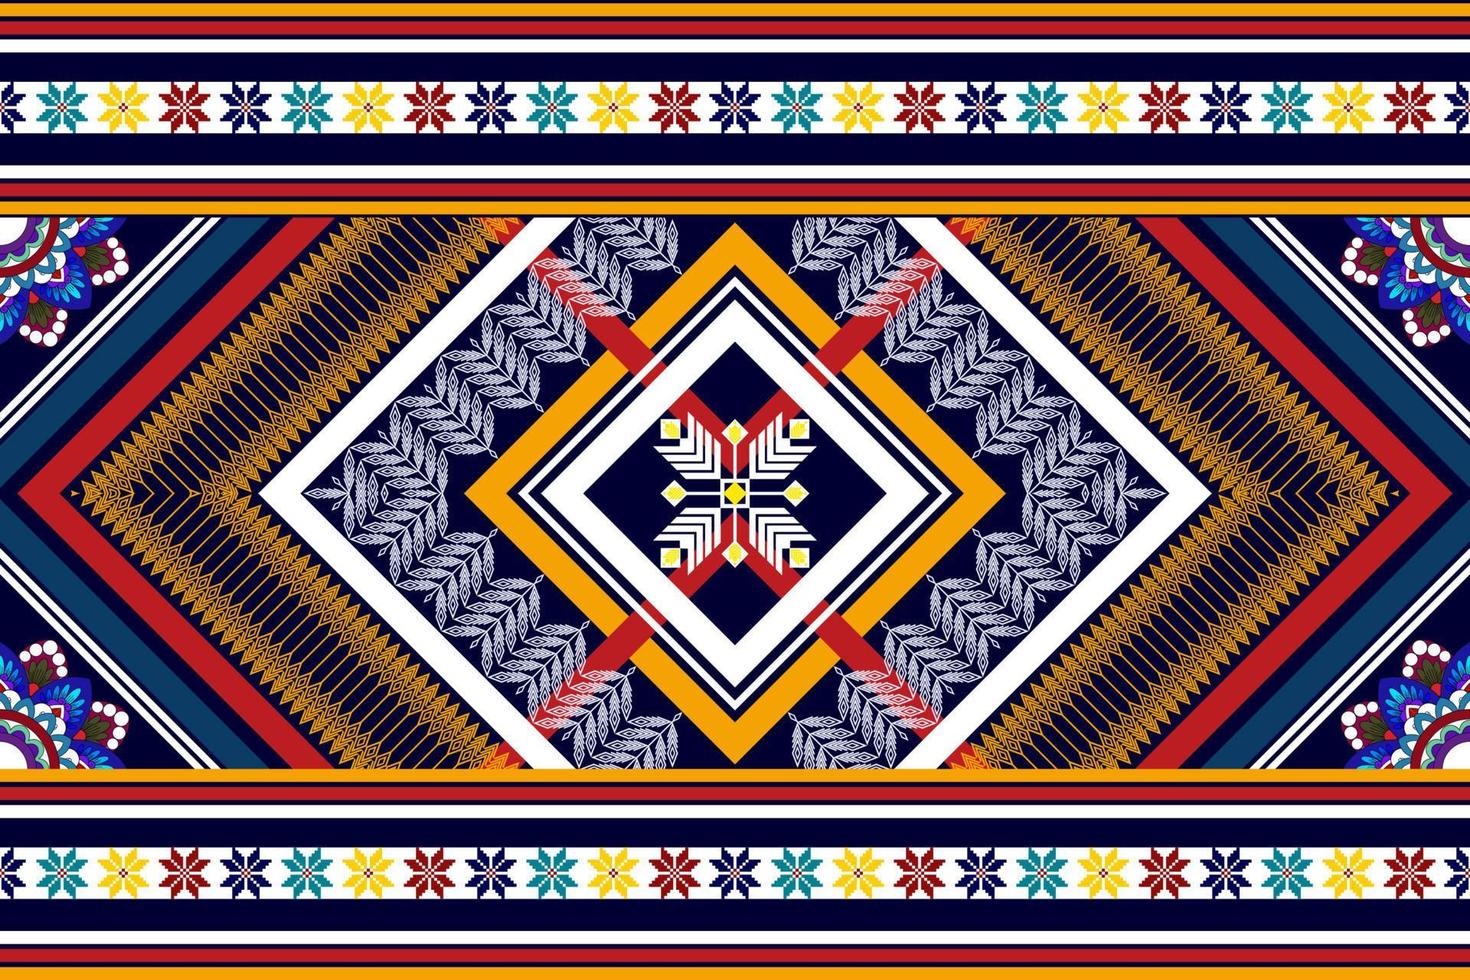 Geometric abstract Ikat ethnic seamless pattern design. Aztec fabric carpet mandala ornaments textile decorations wallpaper. Tribal boho native ethnic turkey traditional embroidery vector background